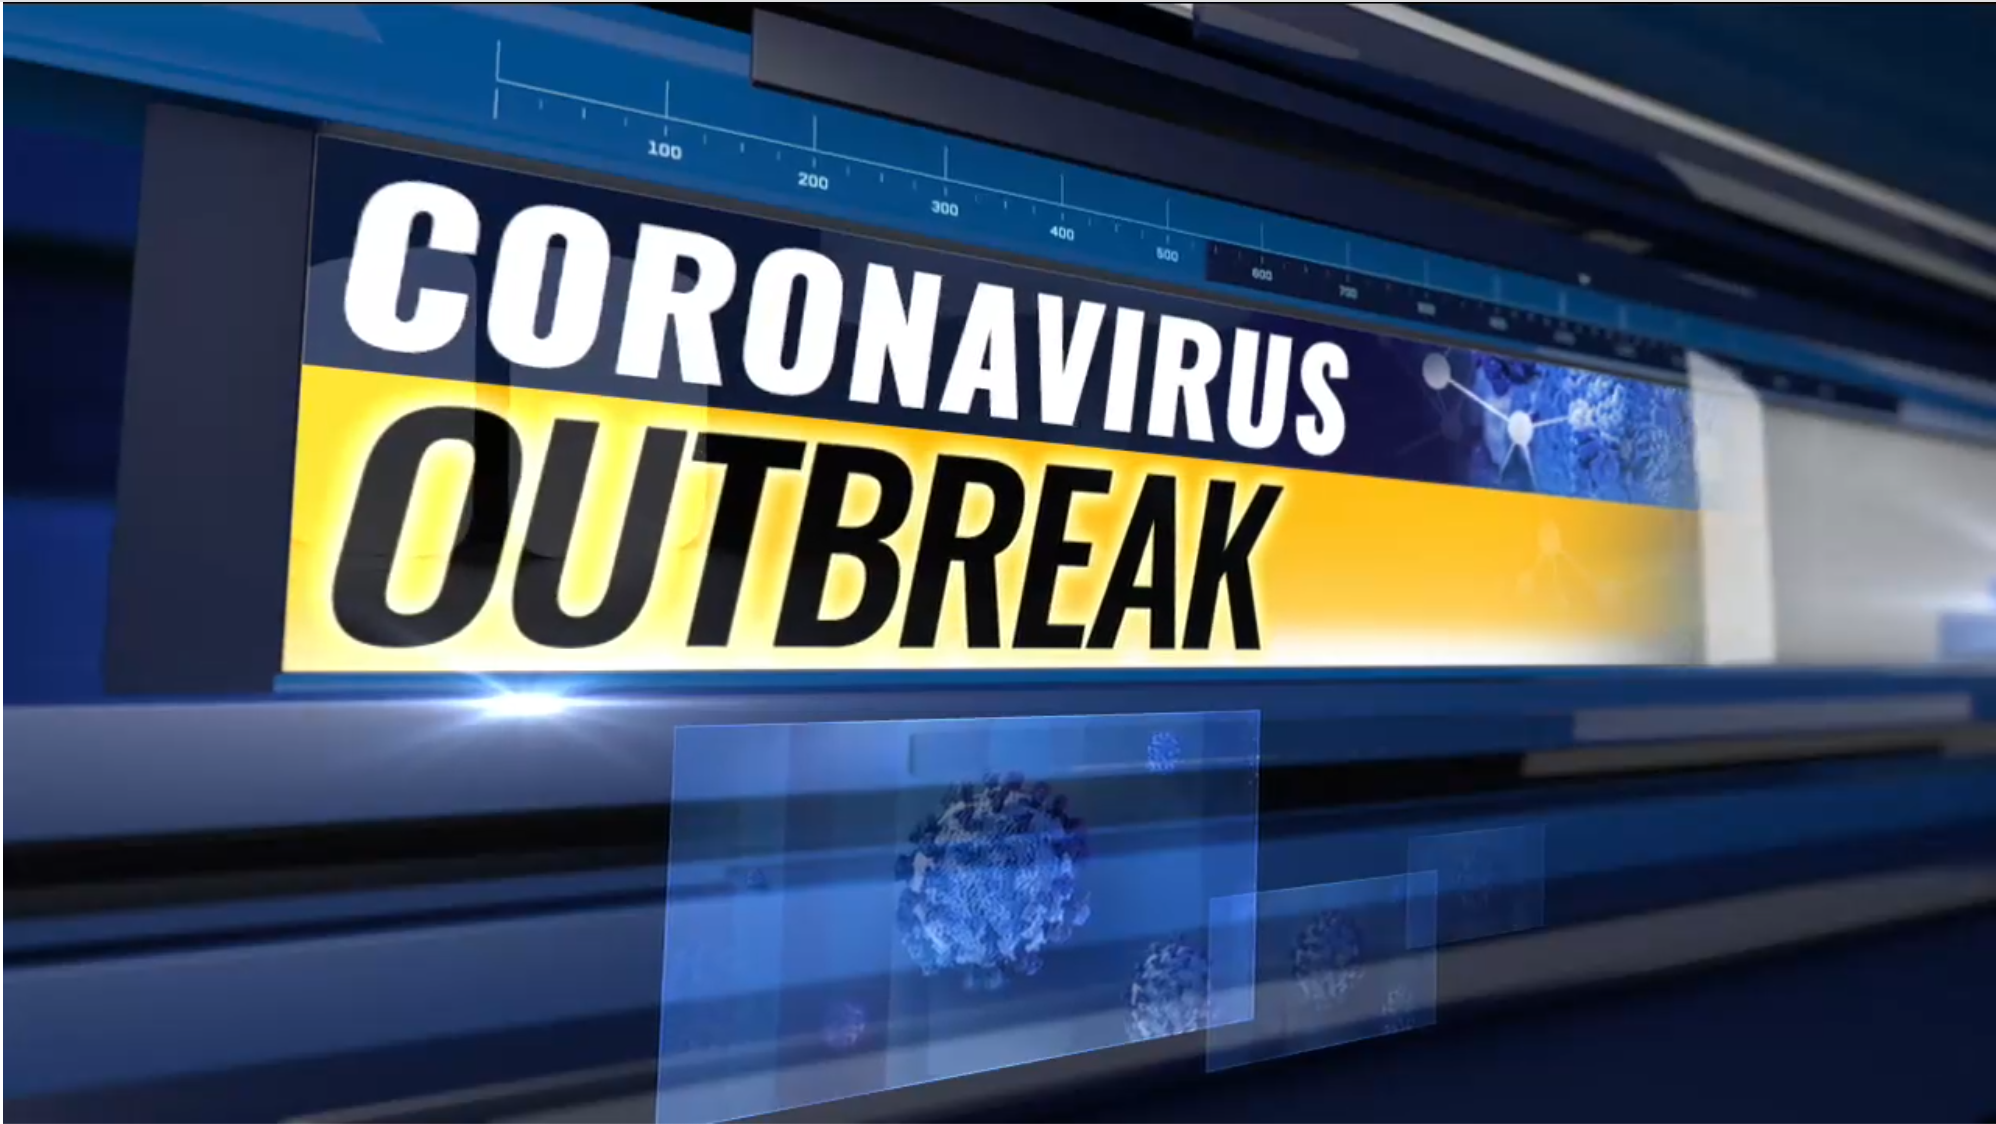 Coronavirus Update - A Misunderstanding about Masks